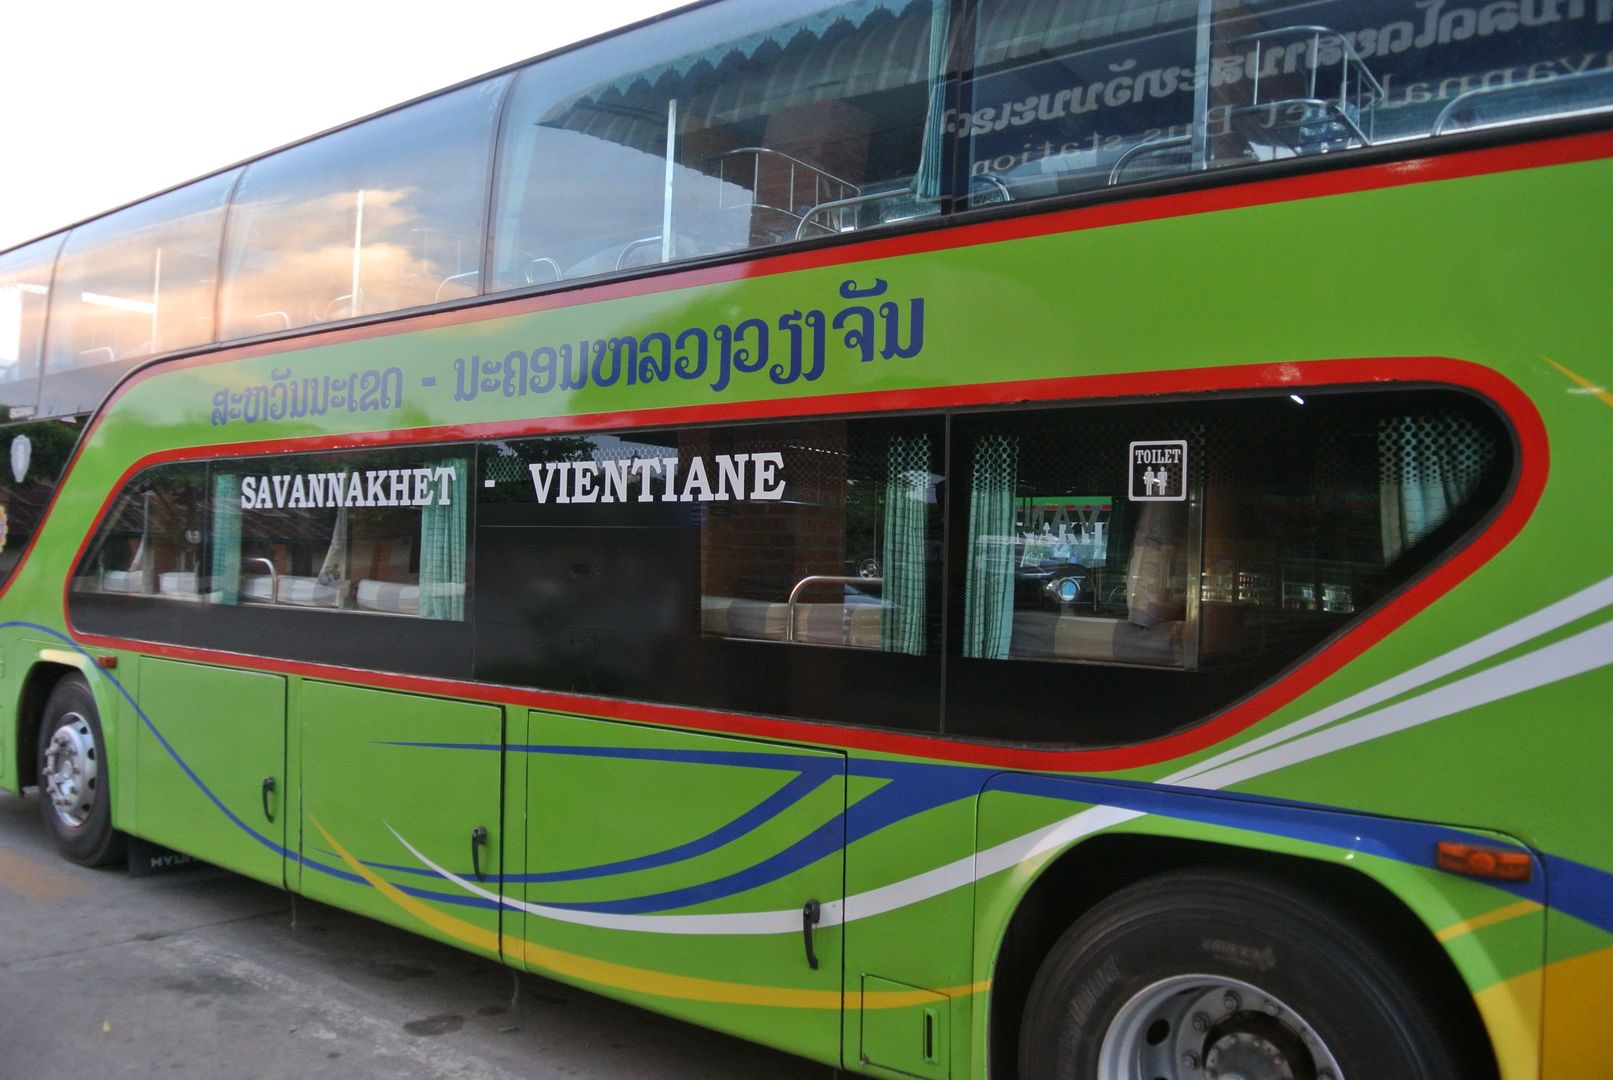 Vientiane transports bus : gares, horaires, destinations, prix